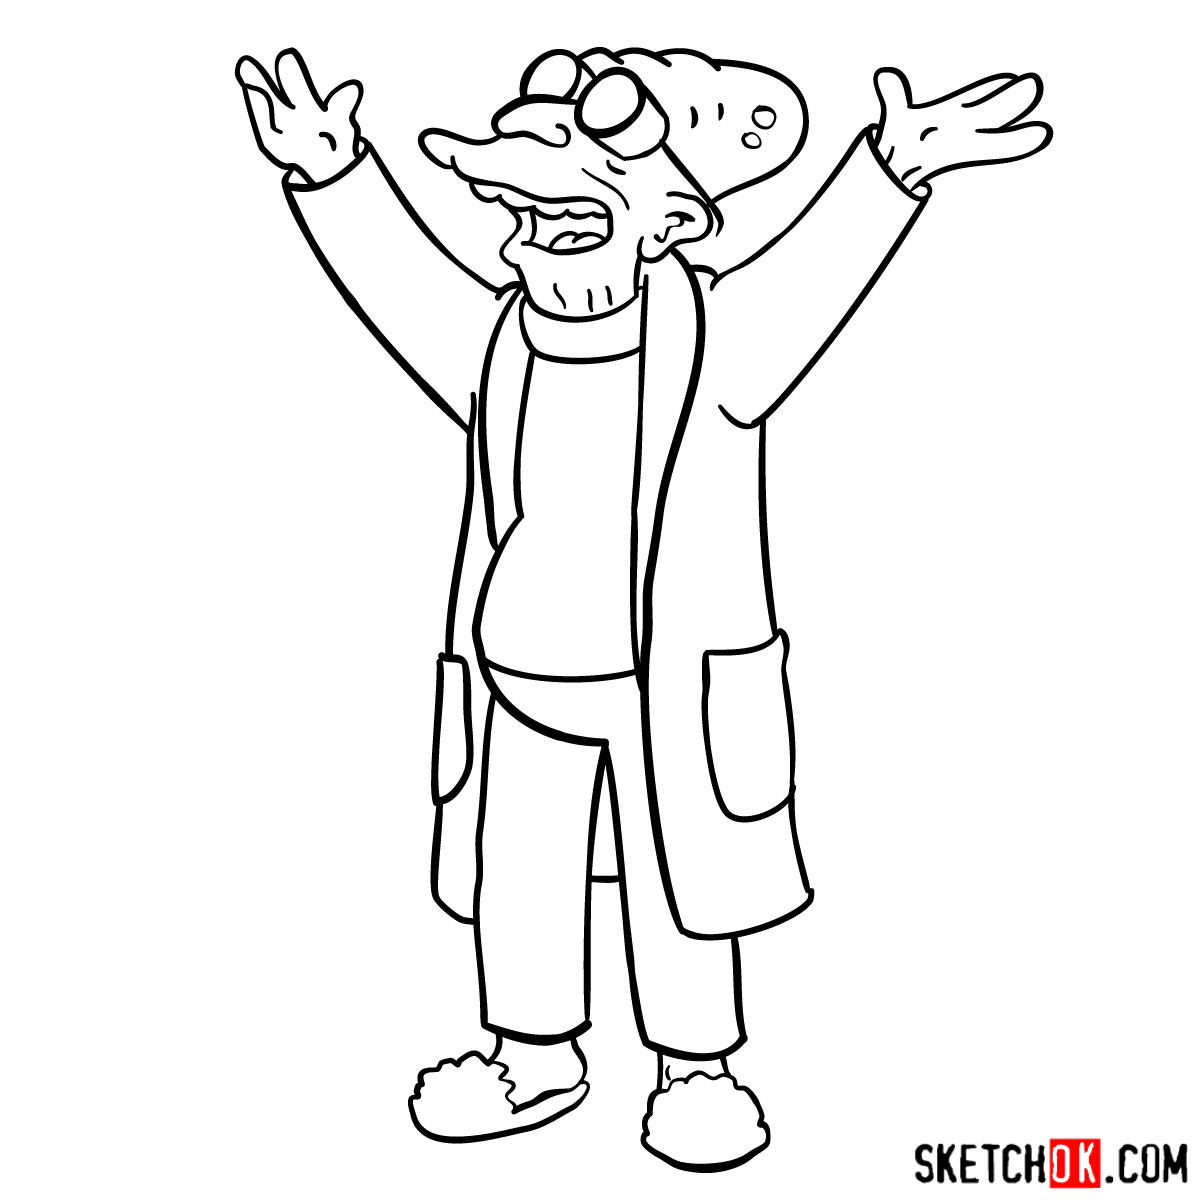 How to draw Professor Farnsworth - step 12